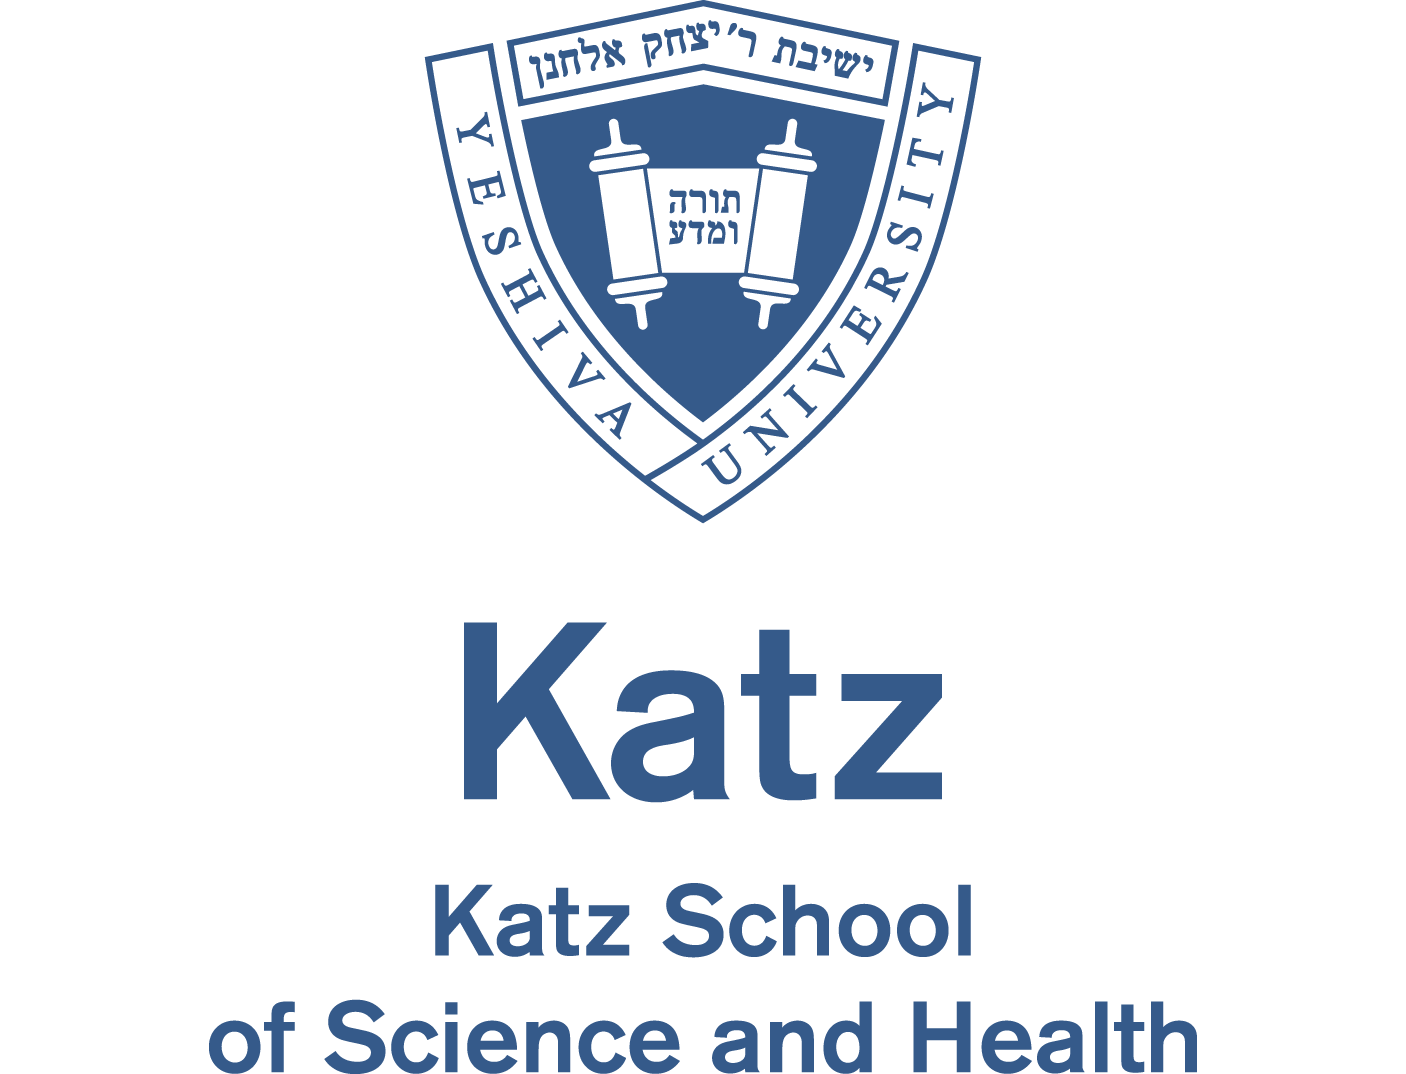 Katz School of Science and Health